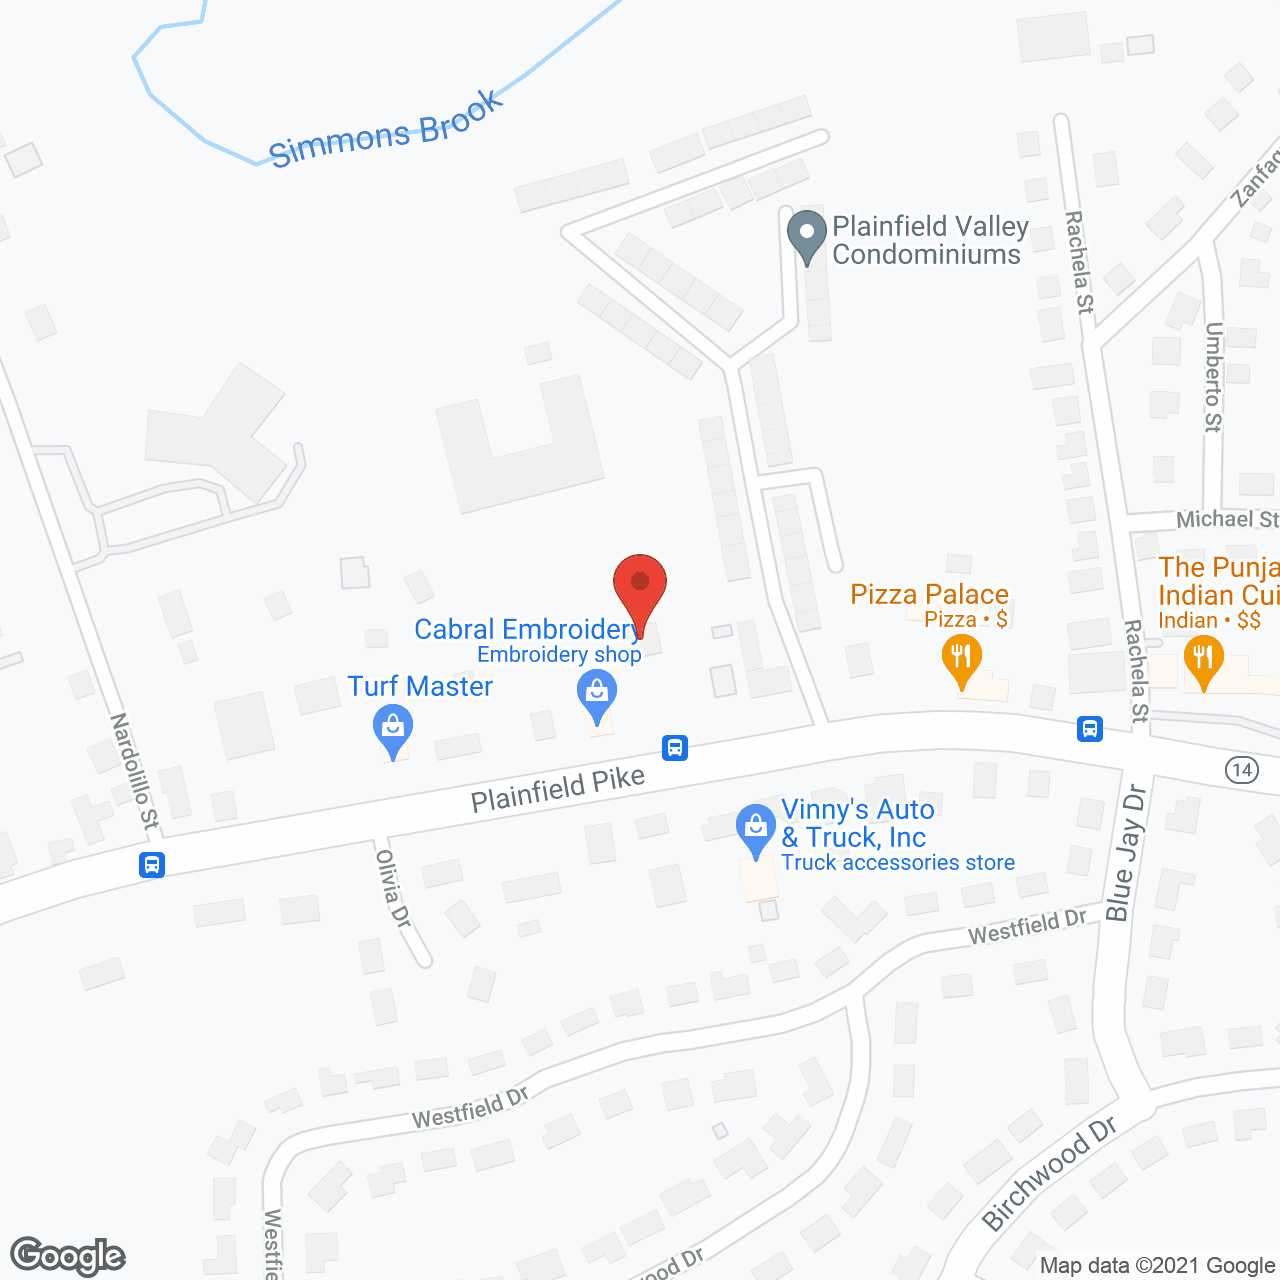 Claiborne Pell Manor in google map